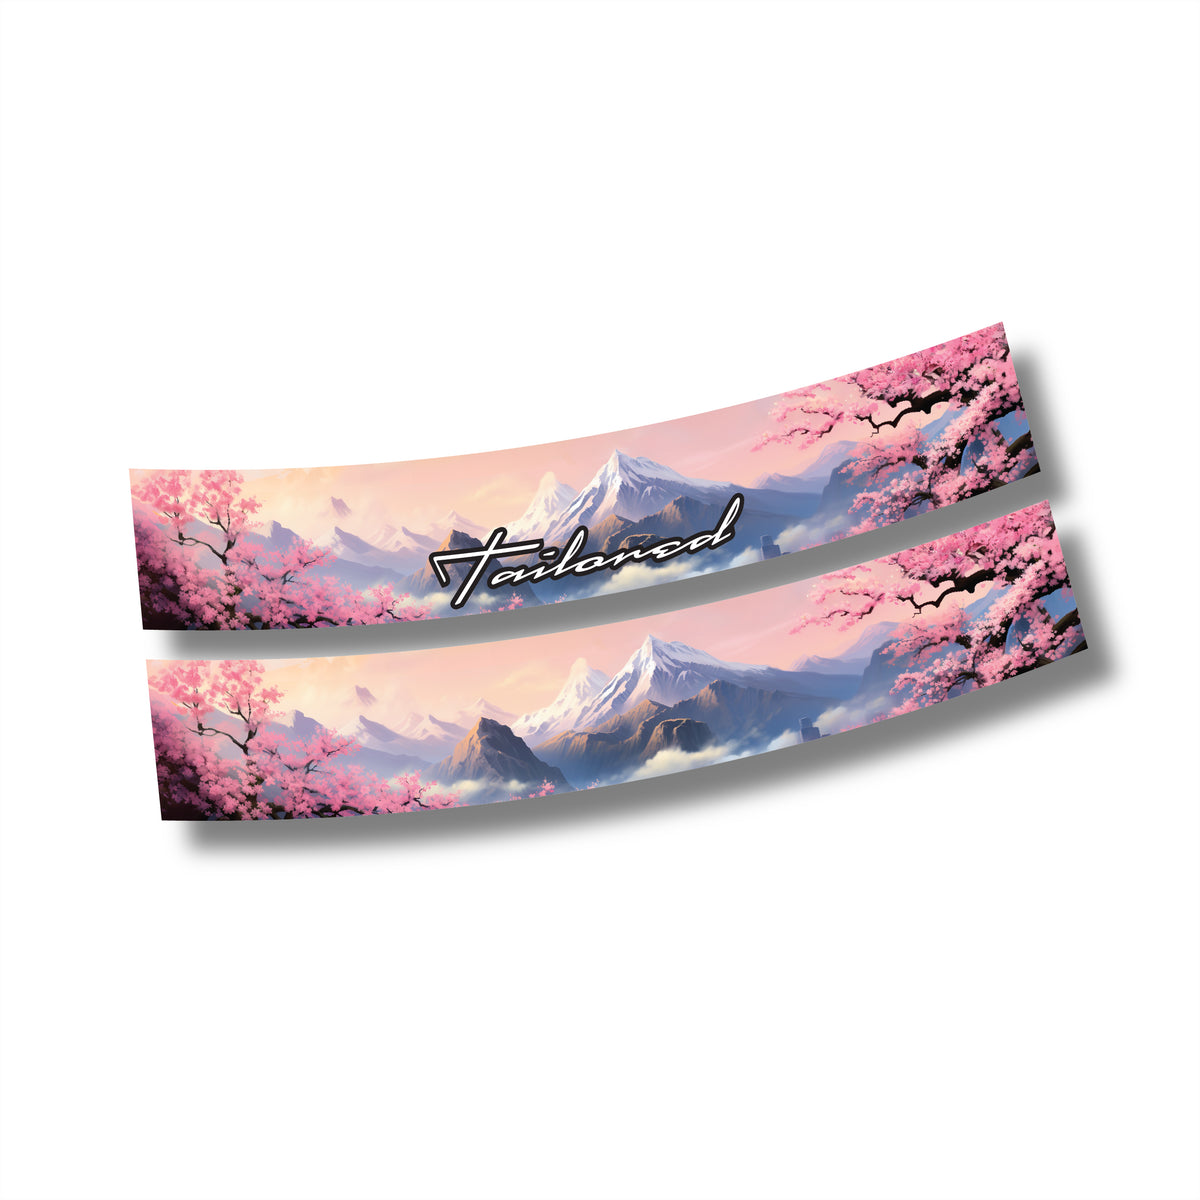 Gloss Cherry Blossom Valley - Banner